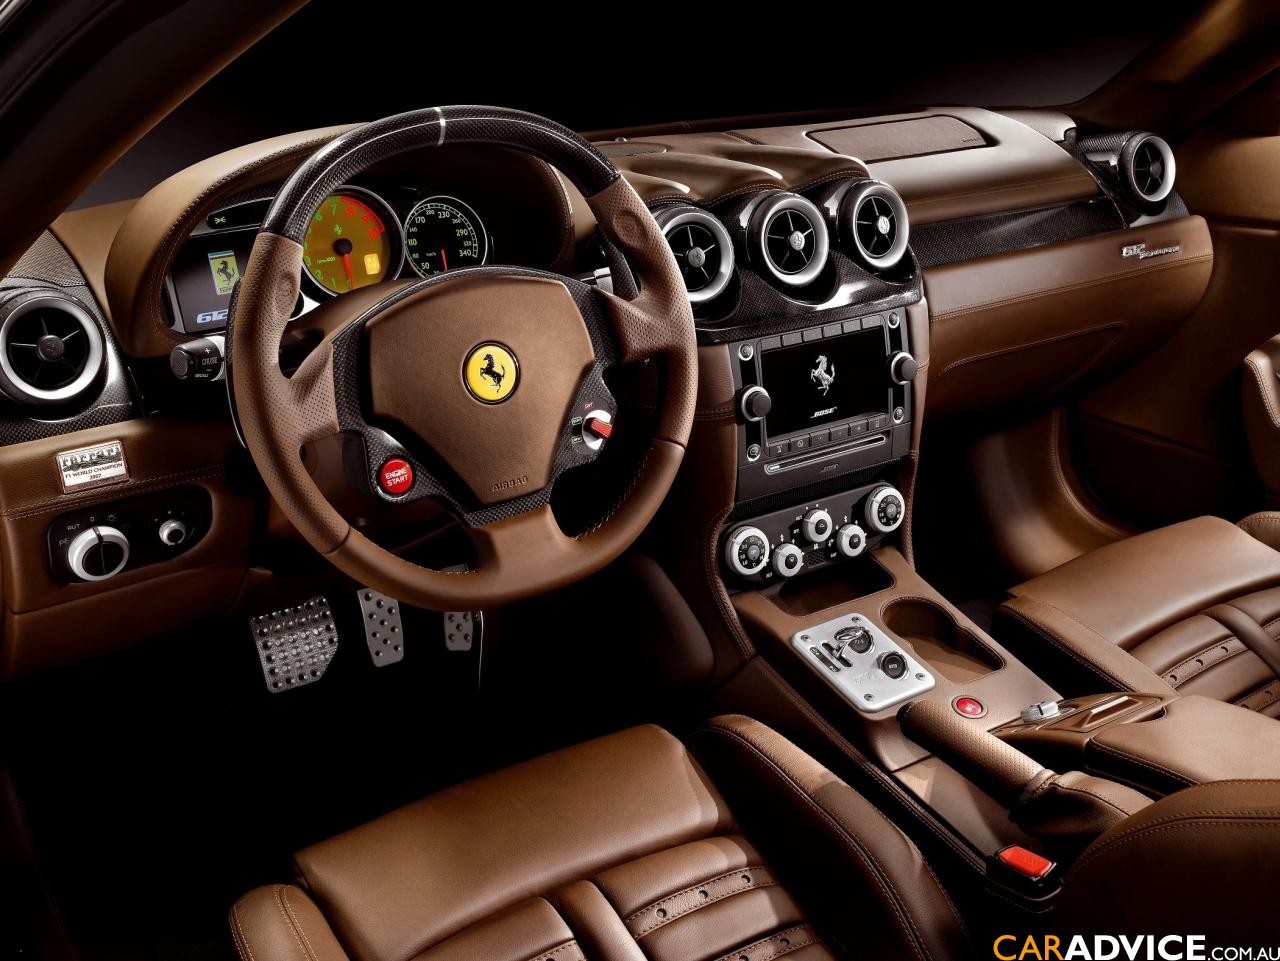 Design New Ferrari Cars, Accessories And Interiors: New 